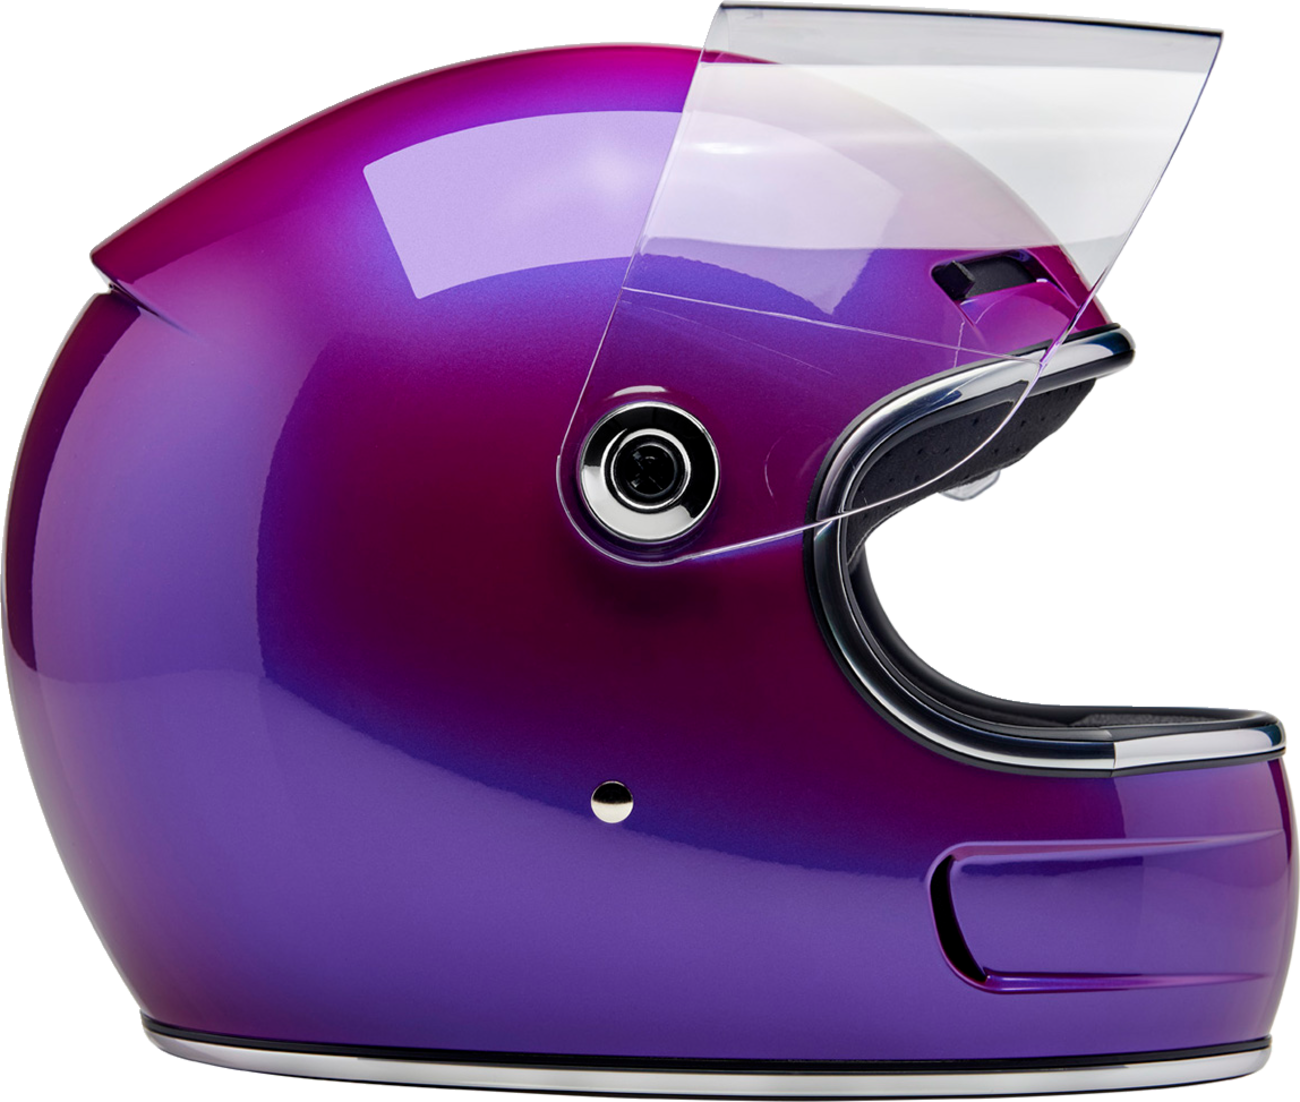 BILTWELL Gringo SV Helmet - Metallic Grape - Large 1006-339-504